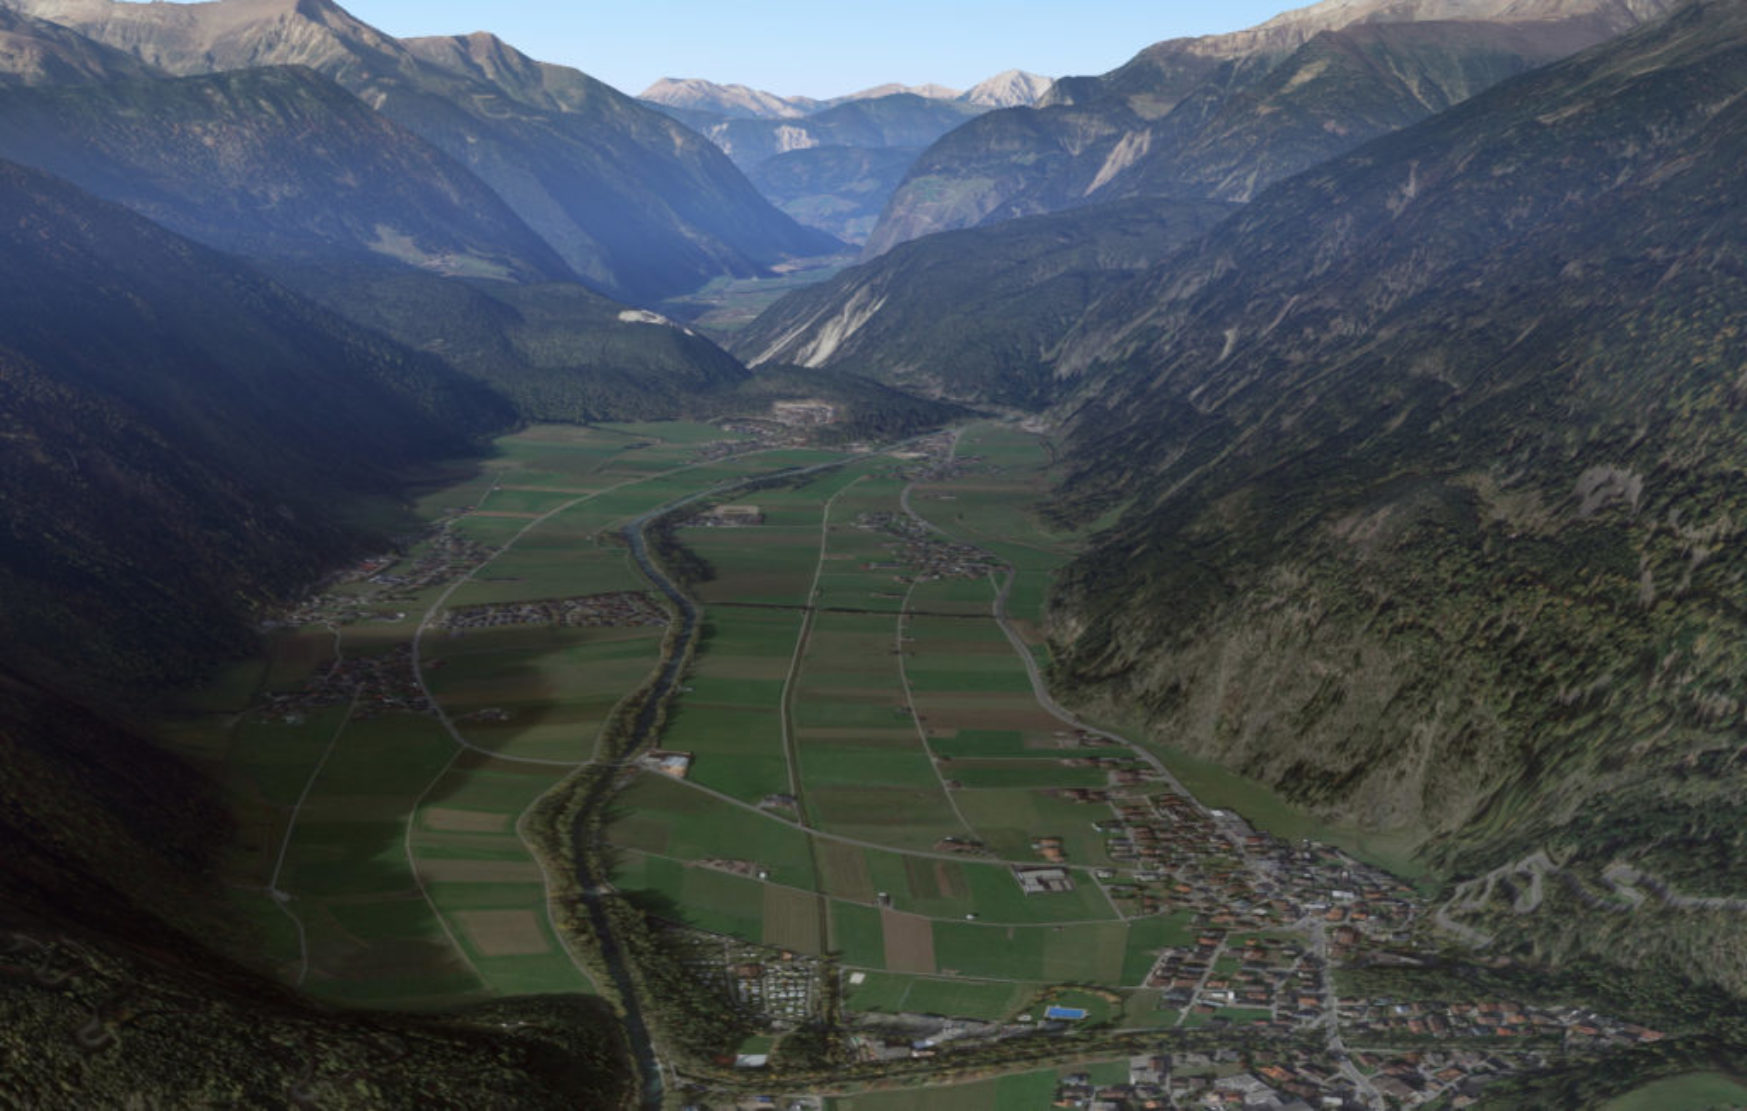 Otztal valley view over Längenfeld